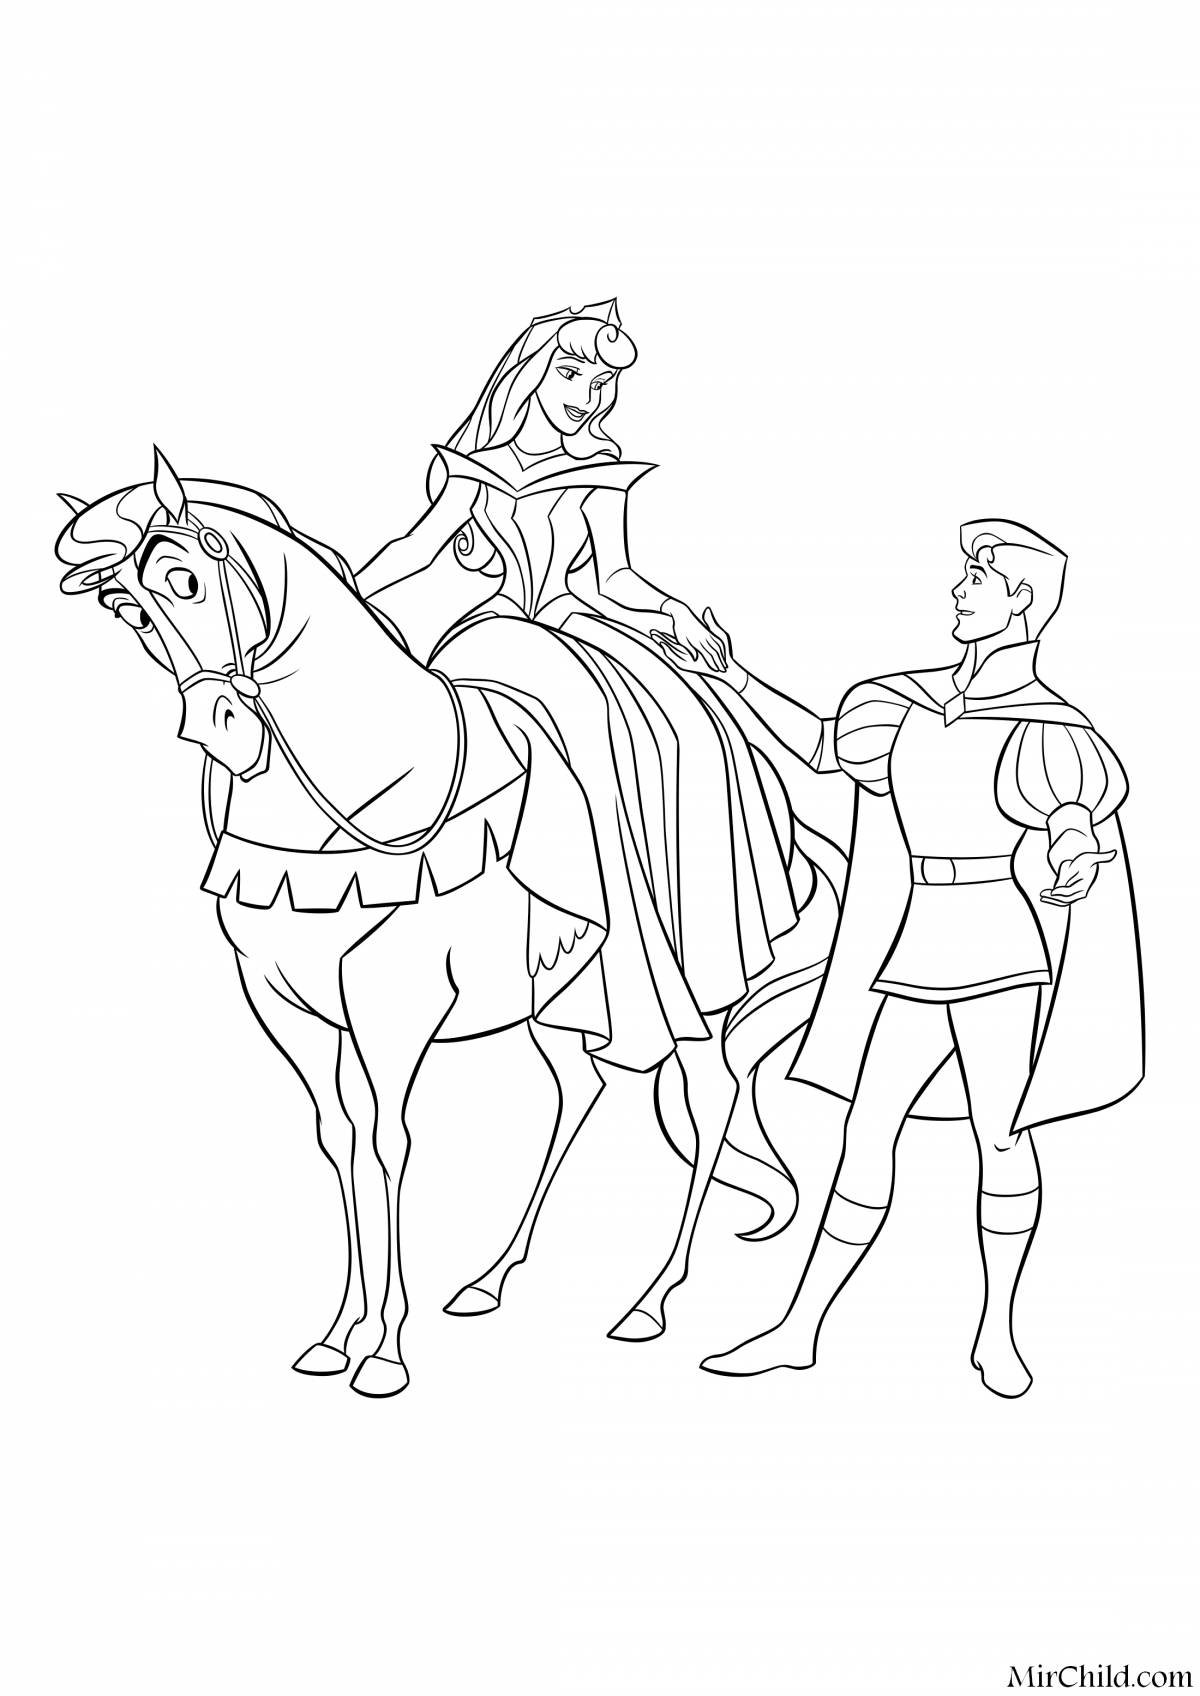 Princess on a horse #5